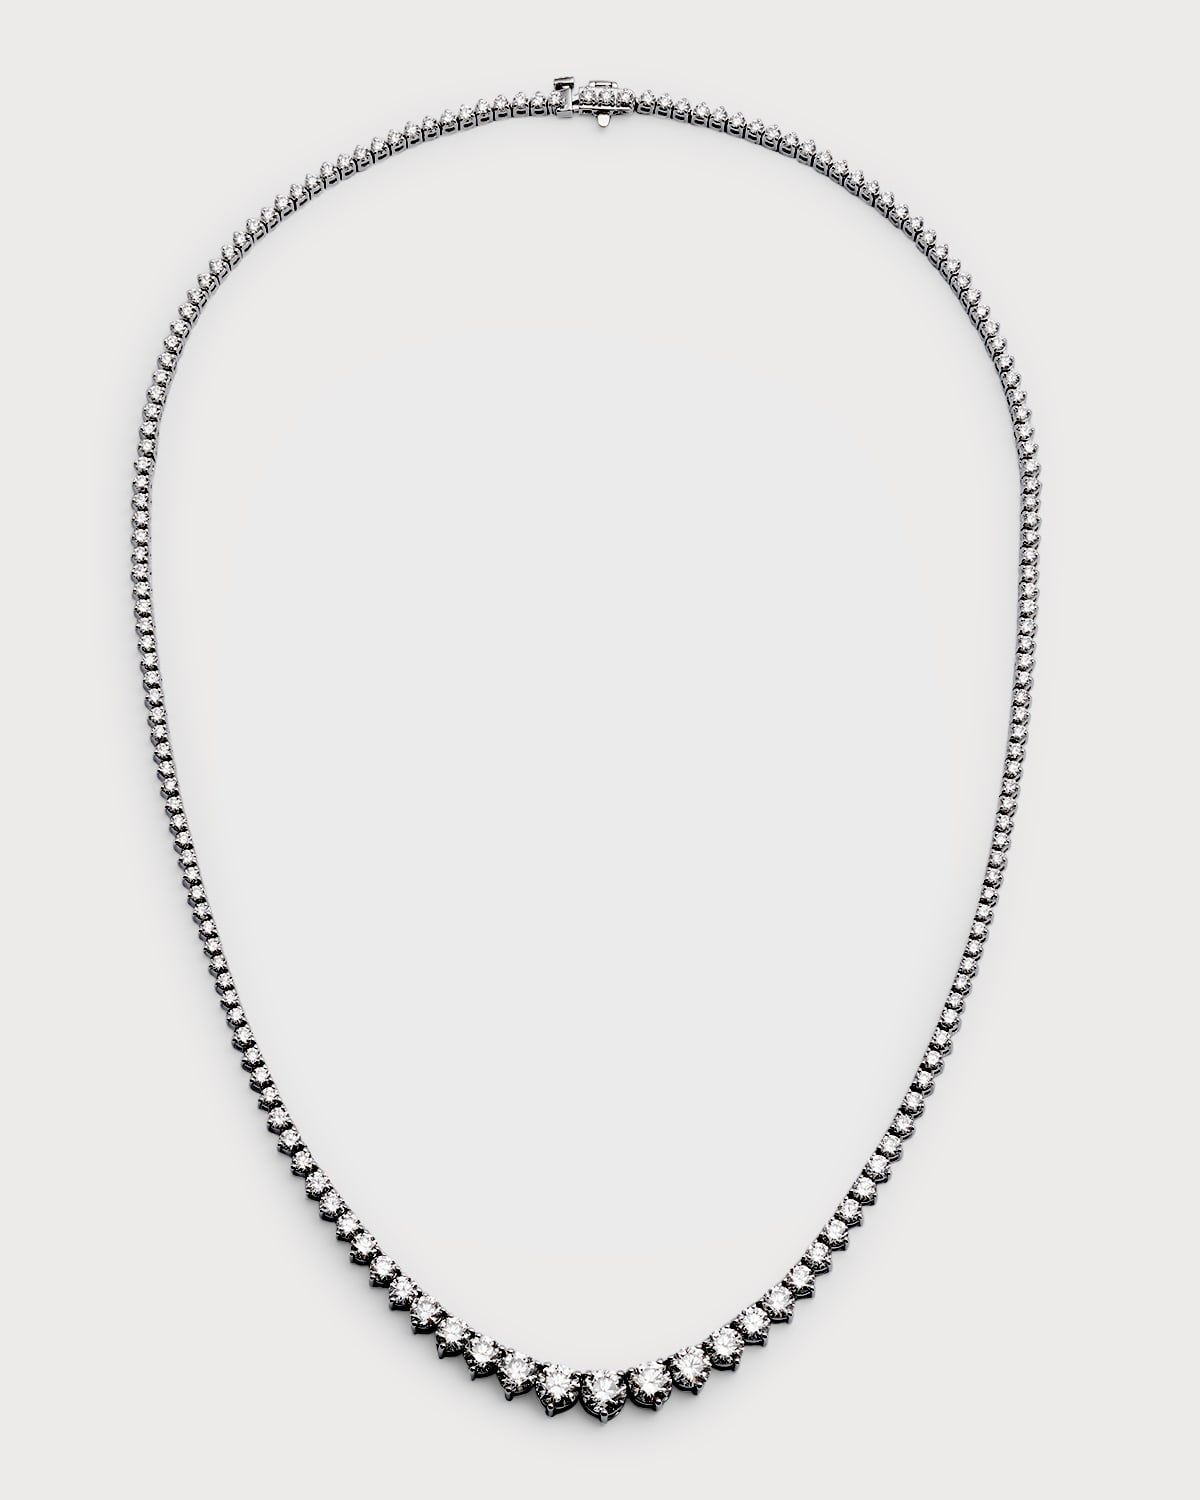 Neiman Marcus Diamonds 18k White Gold Necklace With Graduated Diamonds